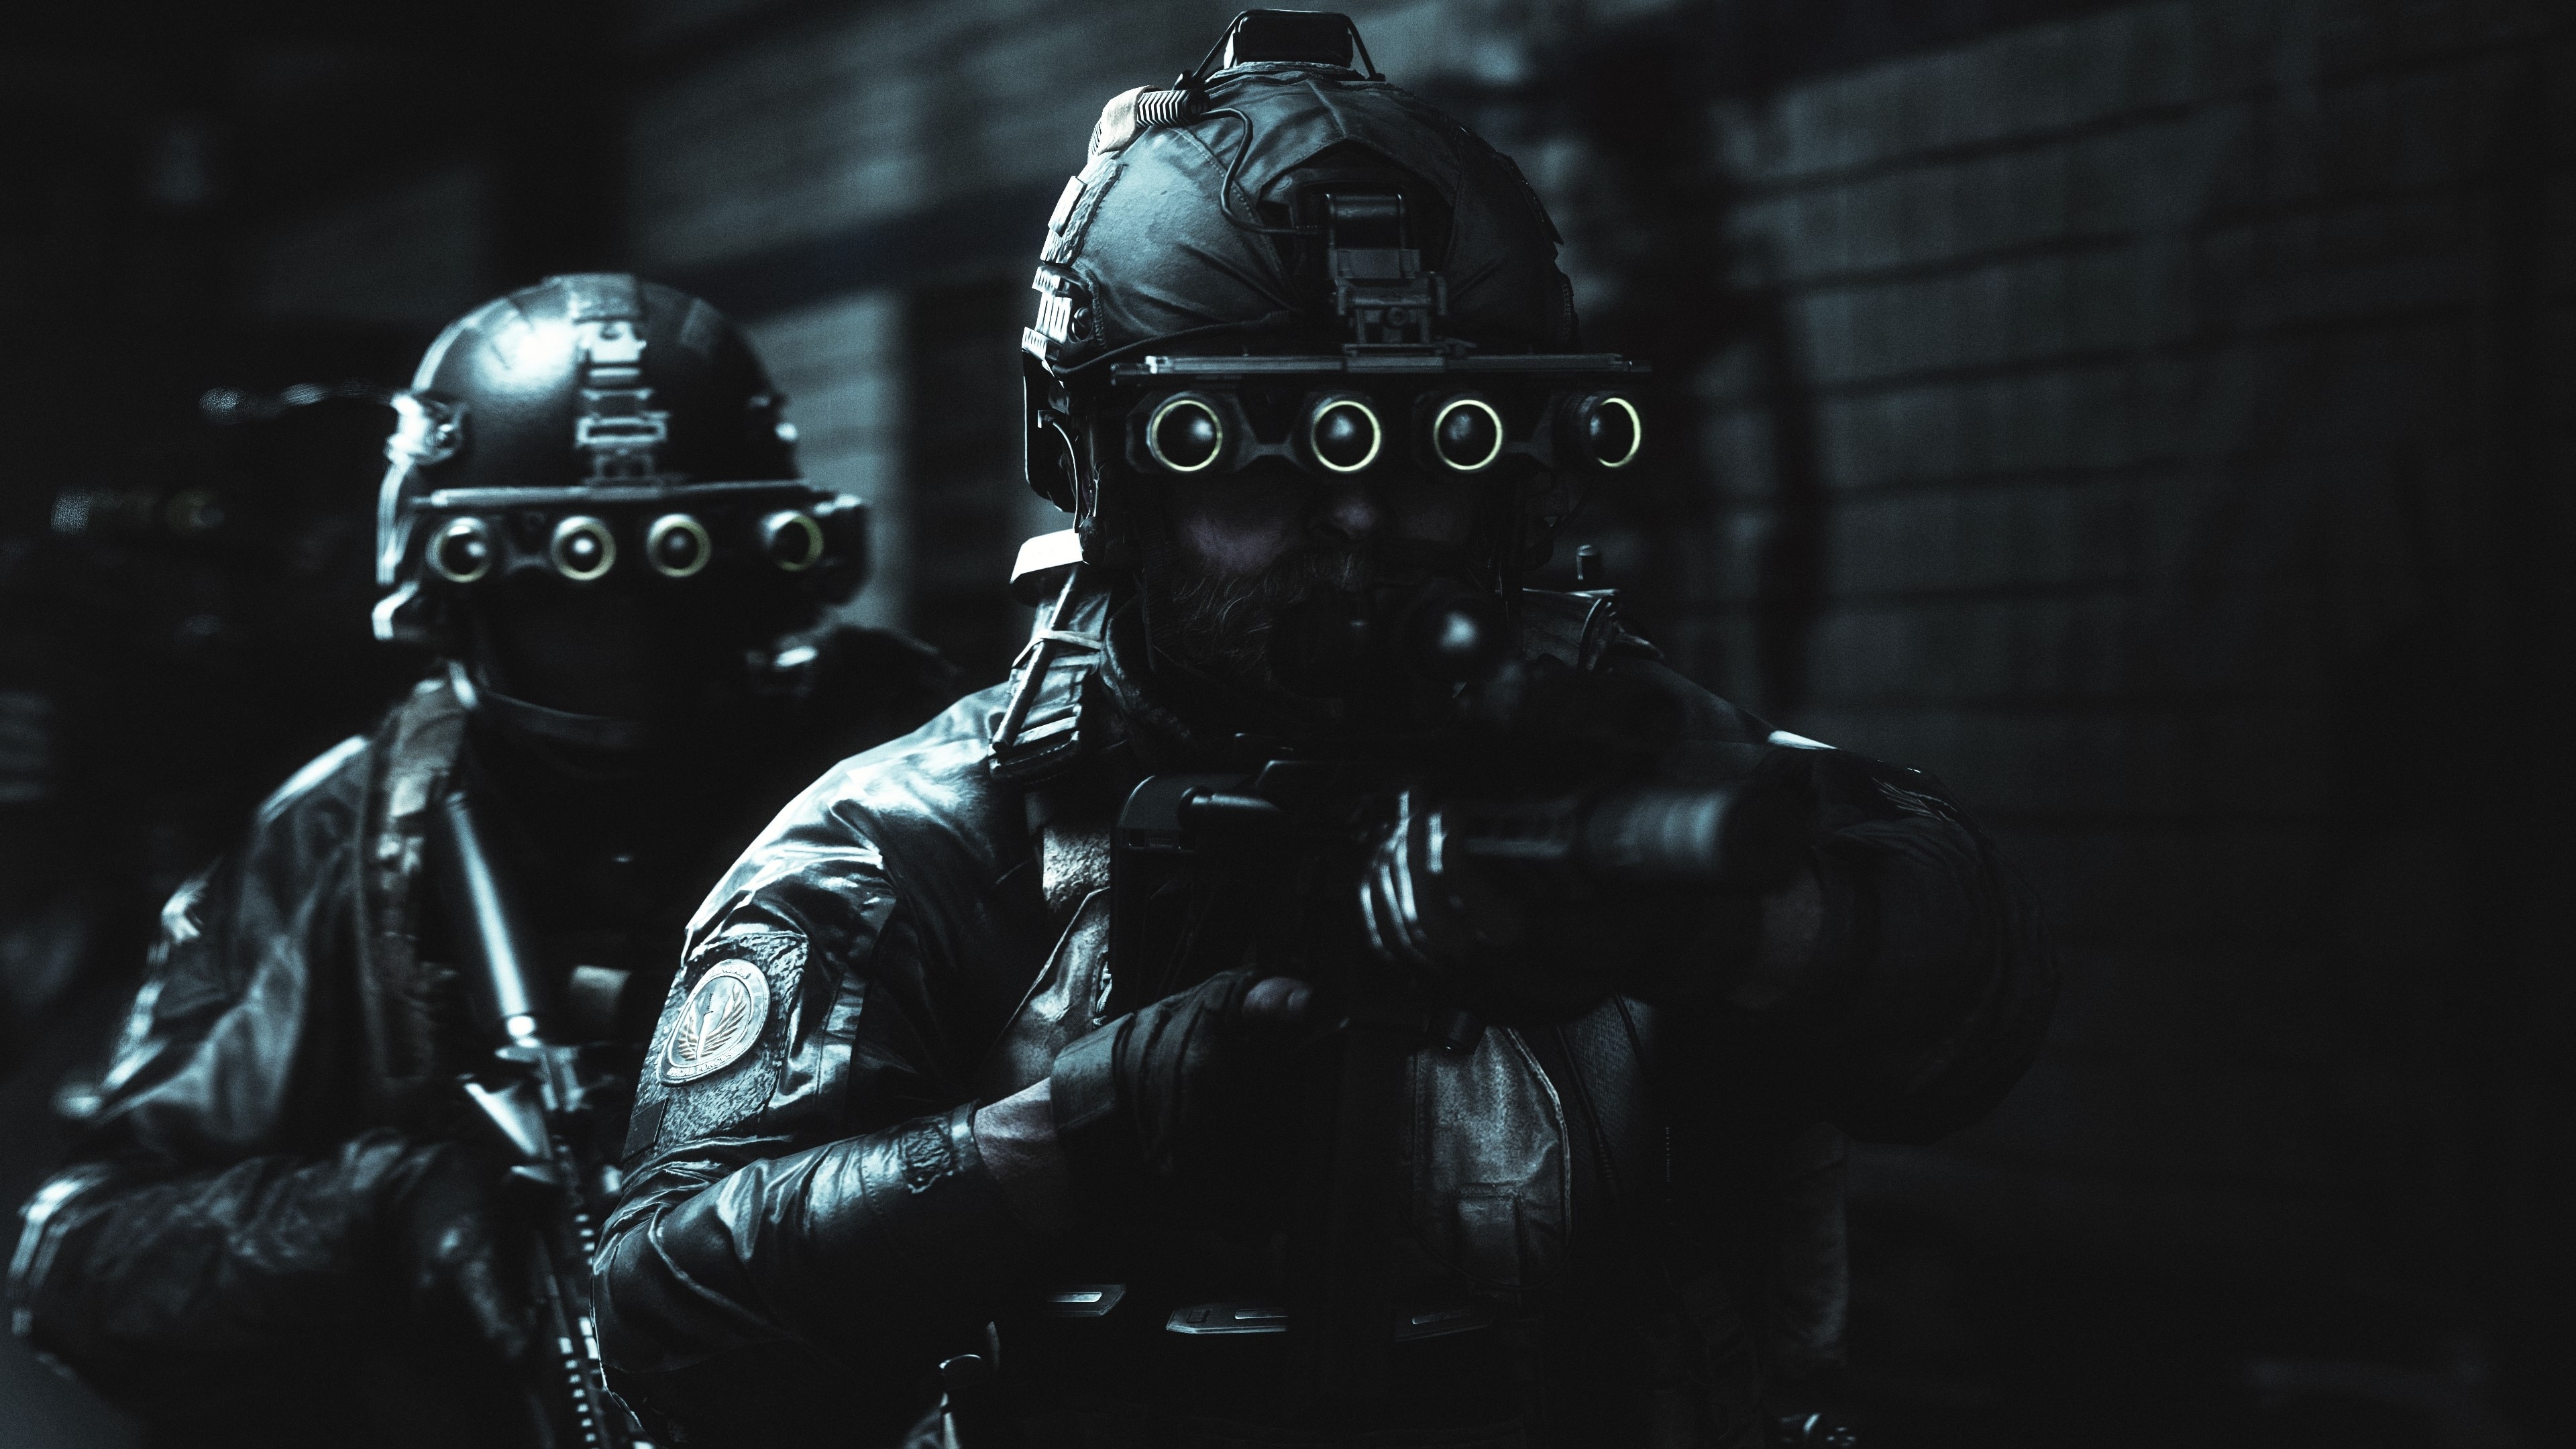 Steam Workshop::Call of Duty Modern Warfare 2019 - Cpt. John Price